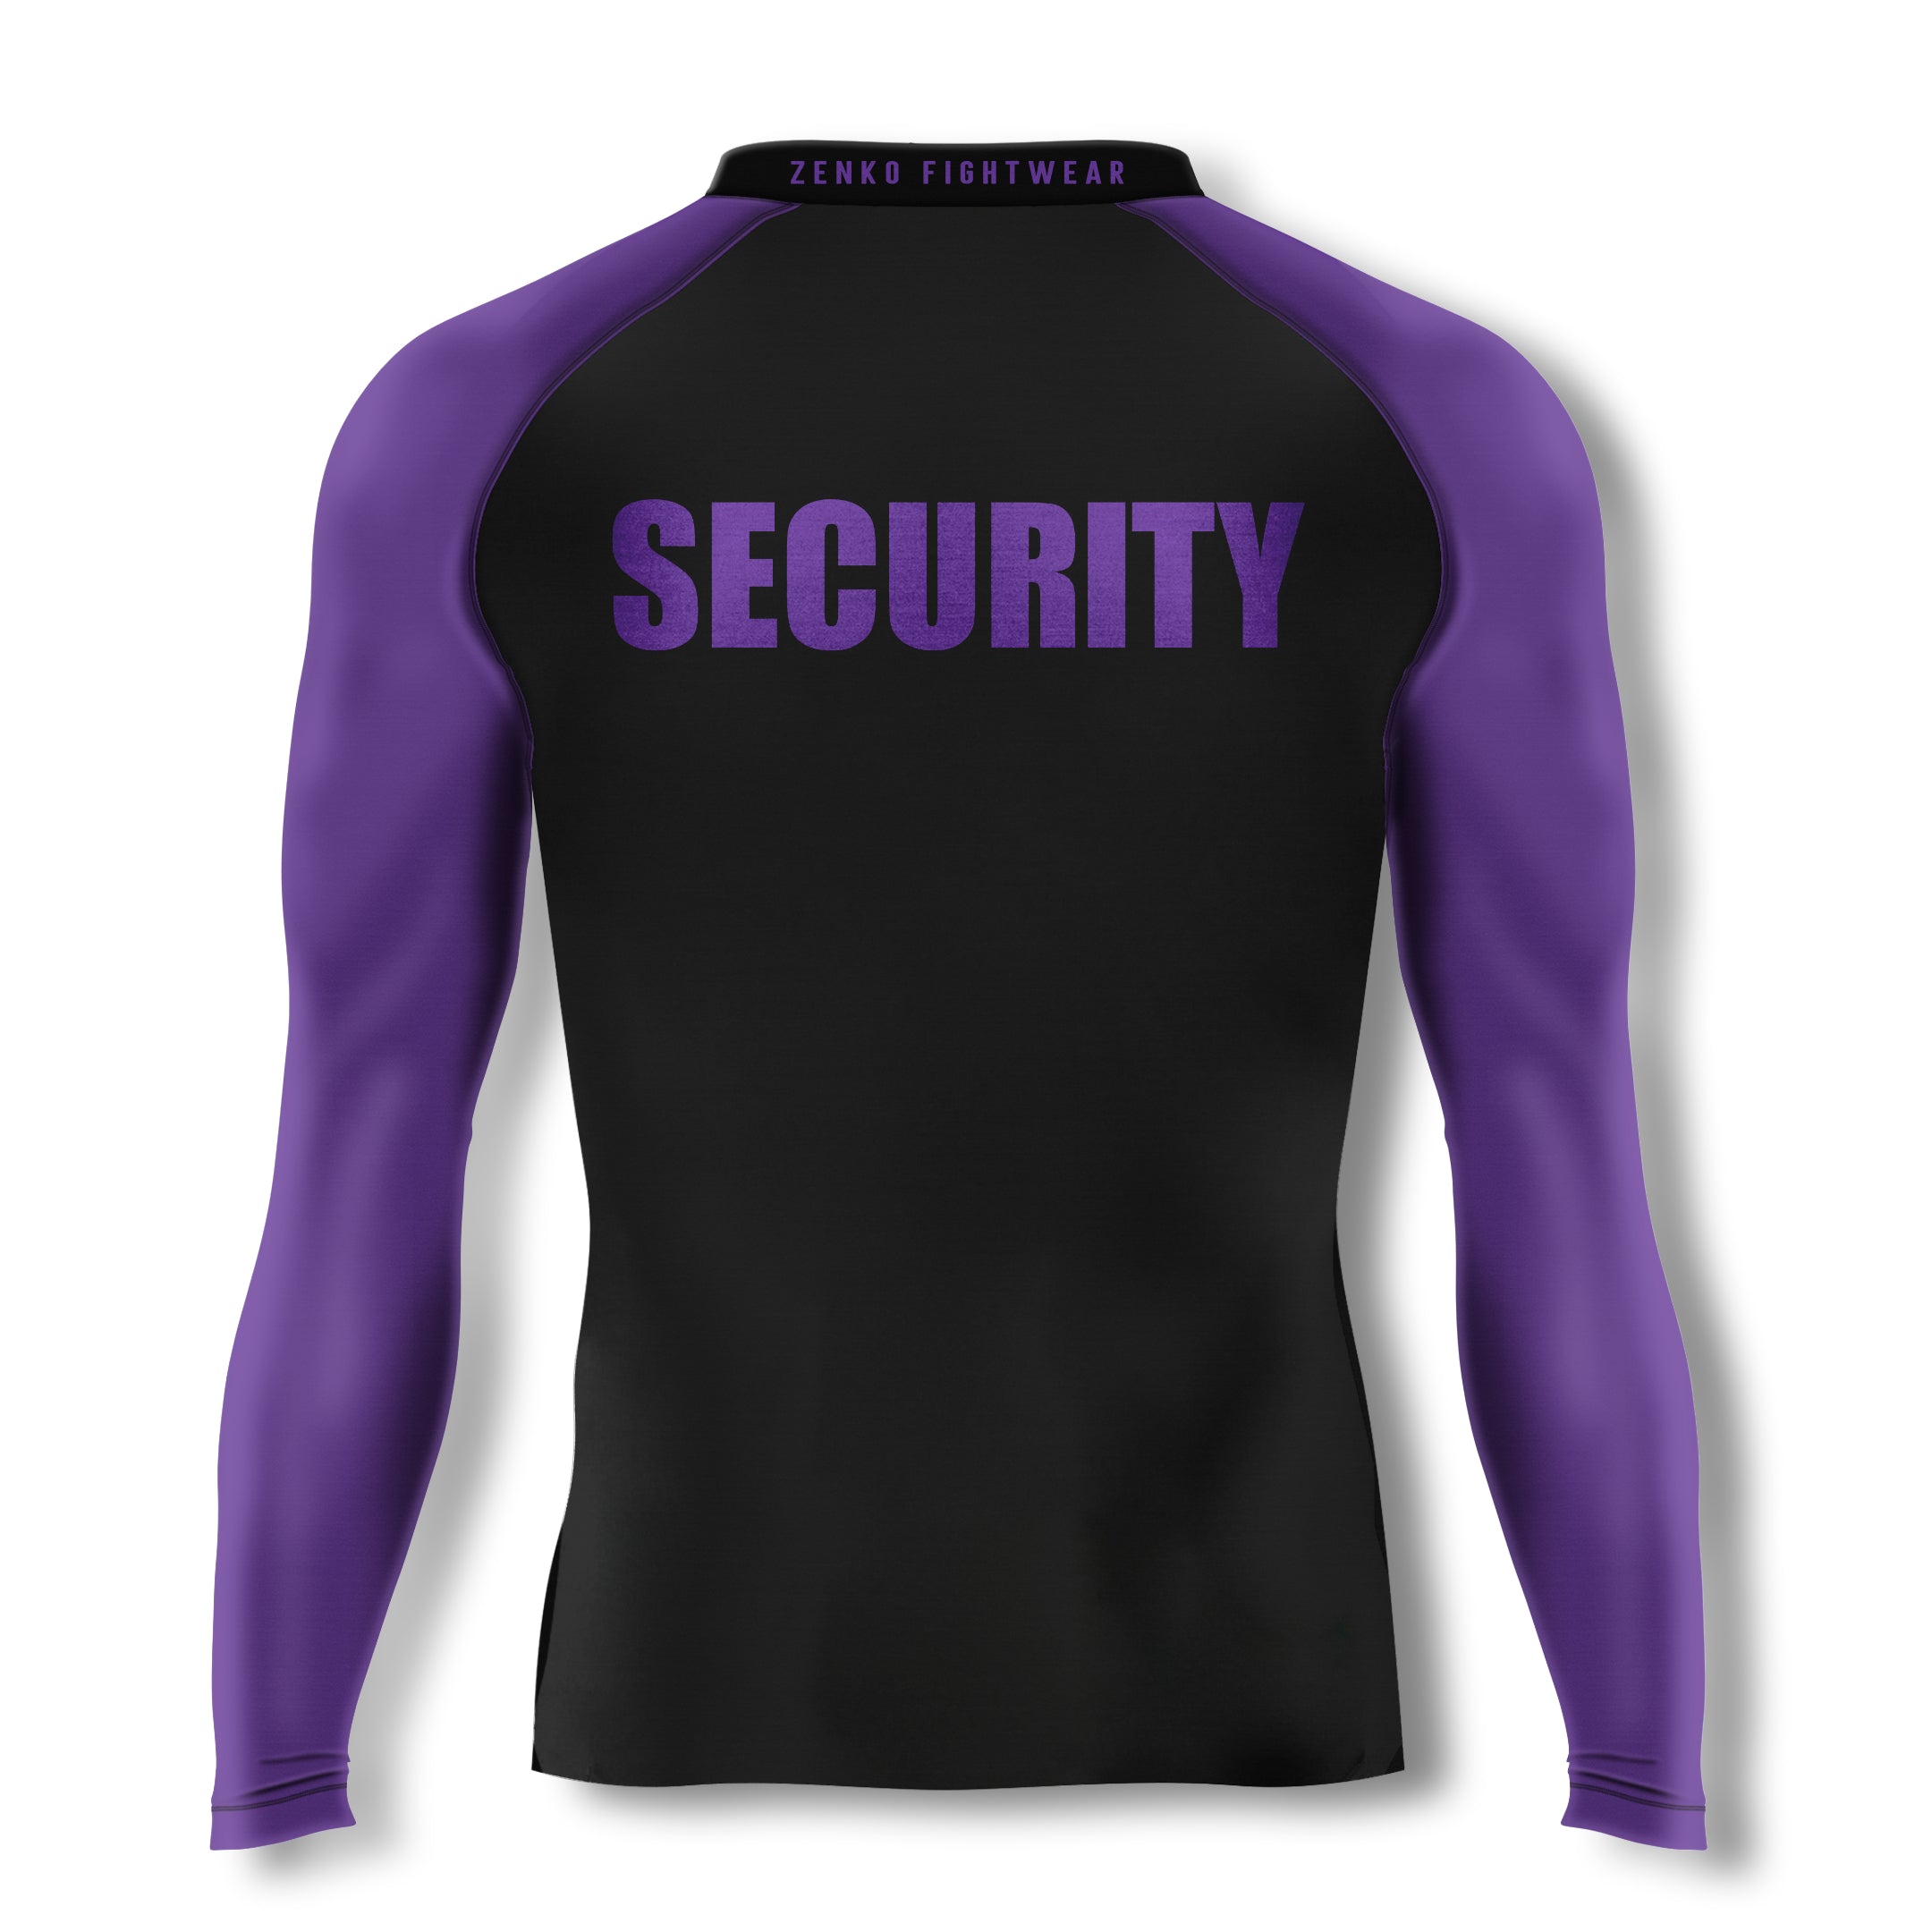 Cool Kids Jiu-Jitsu Club Security Ranked Rashguard (Purple)